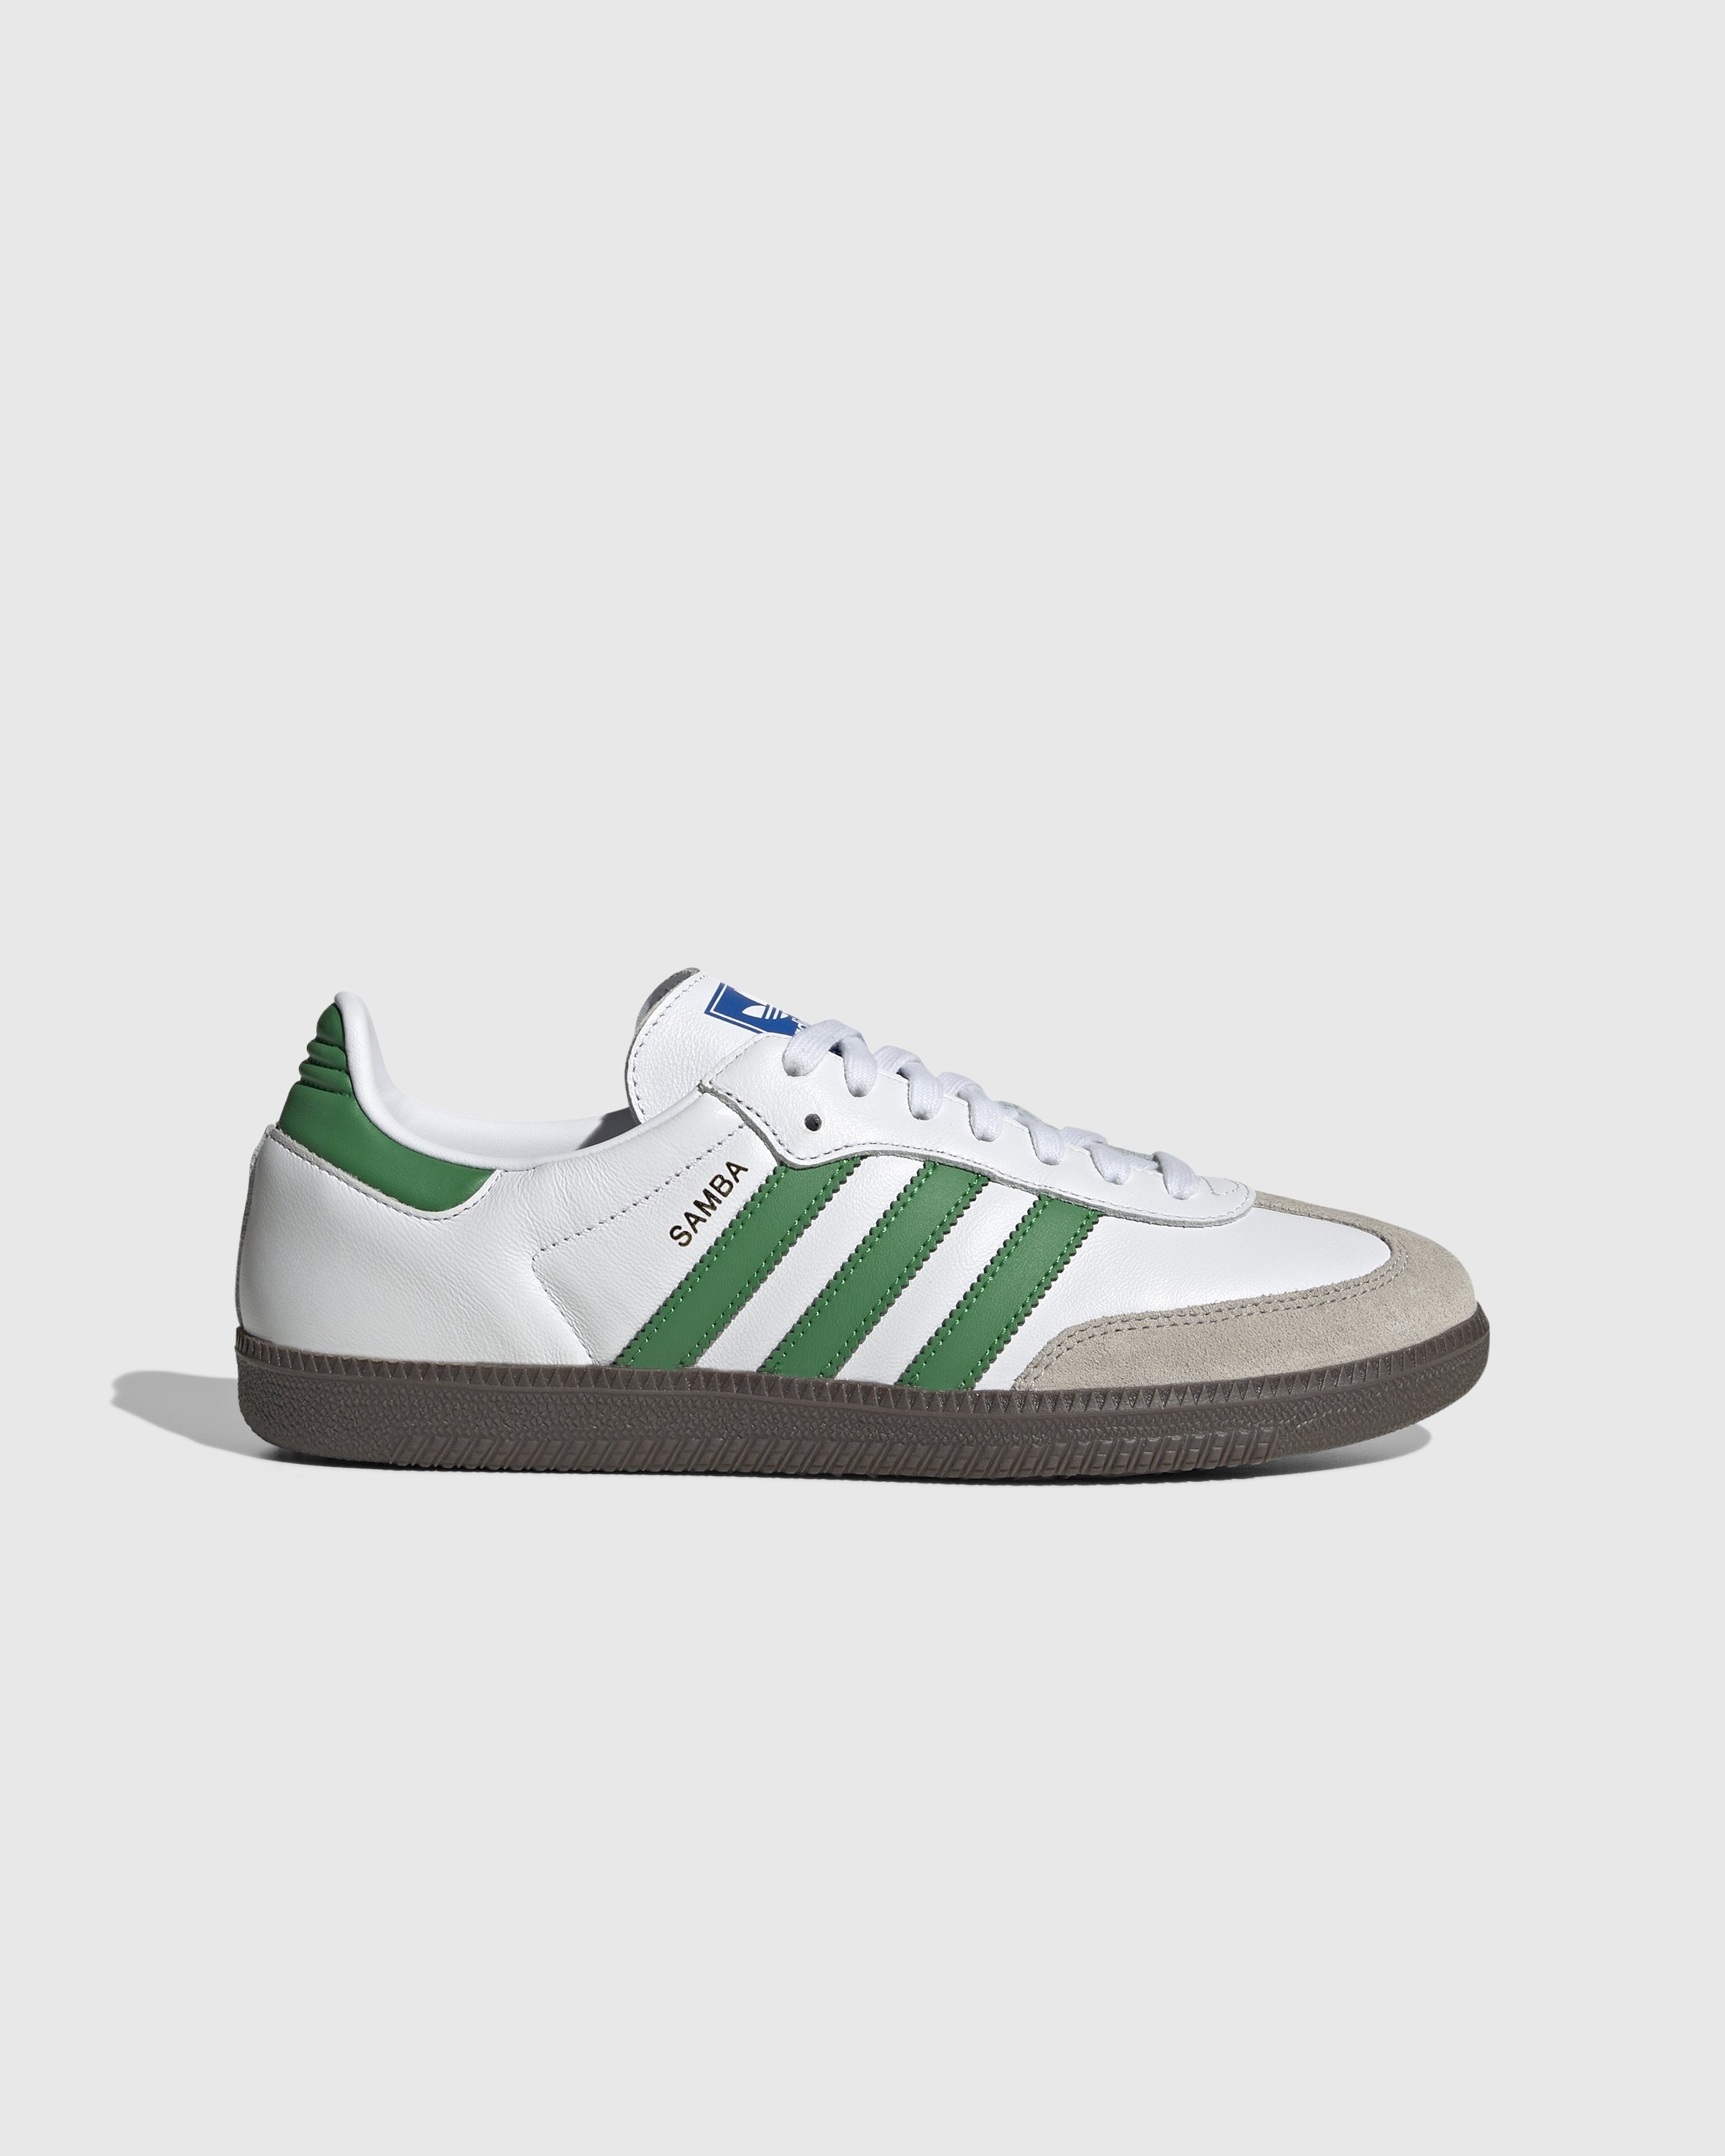 Adidas – Samba OG White/Green - Sneakers - White - Image 1